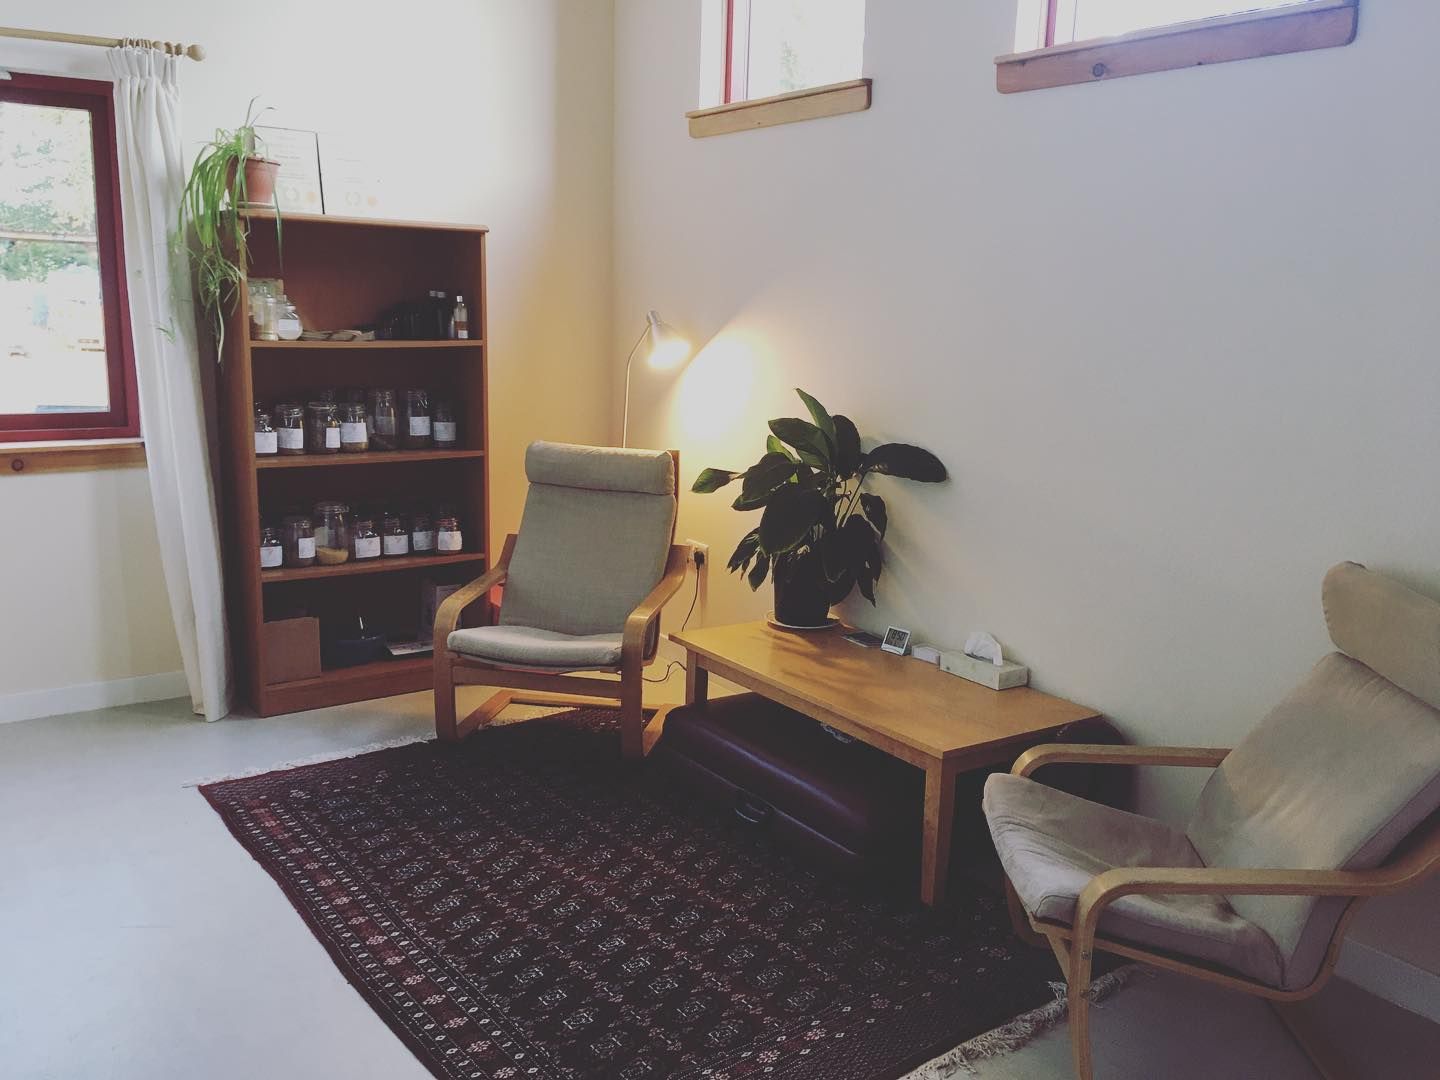 Herbal consultation room